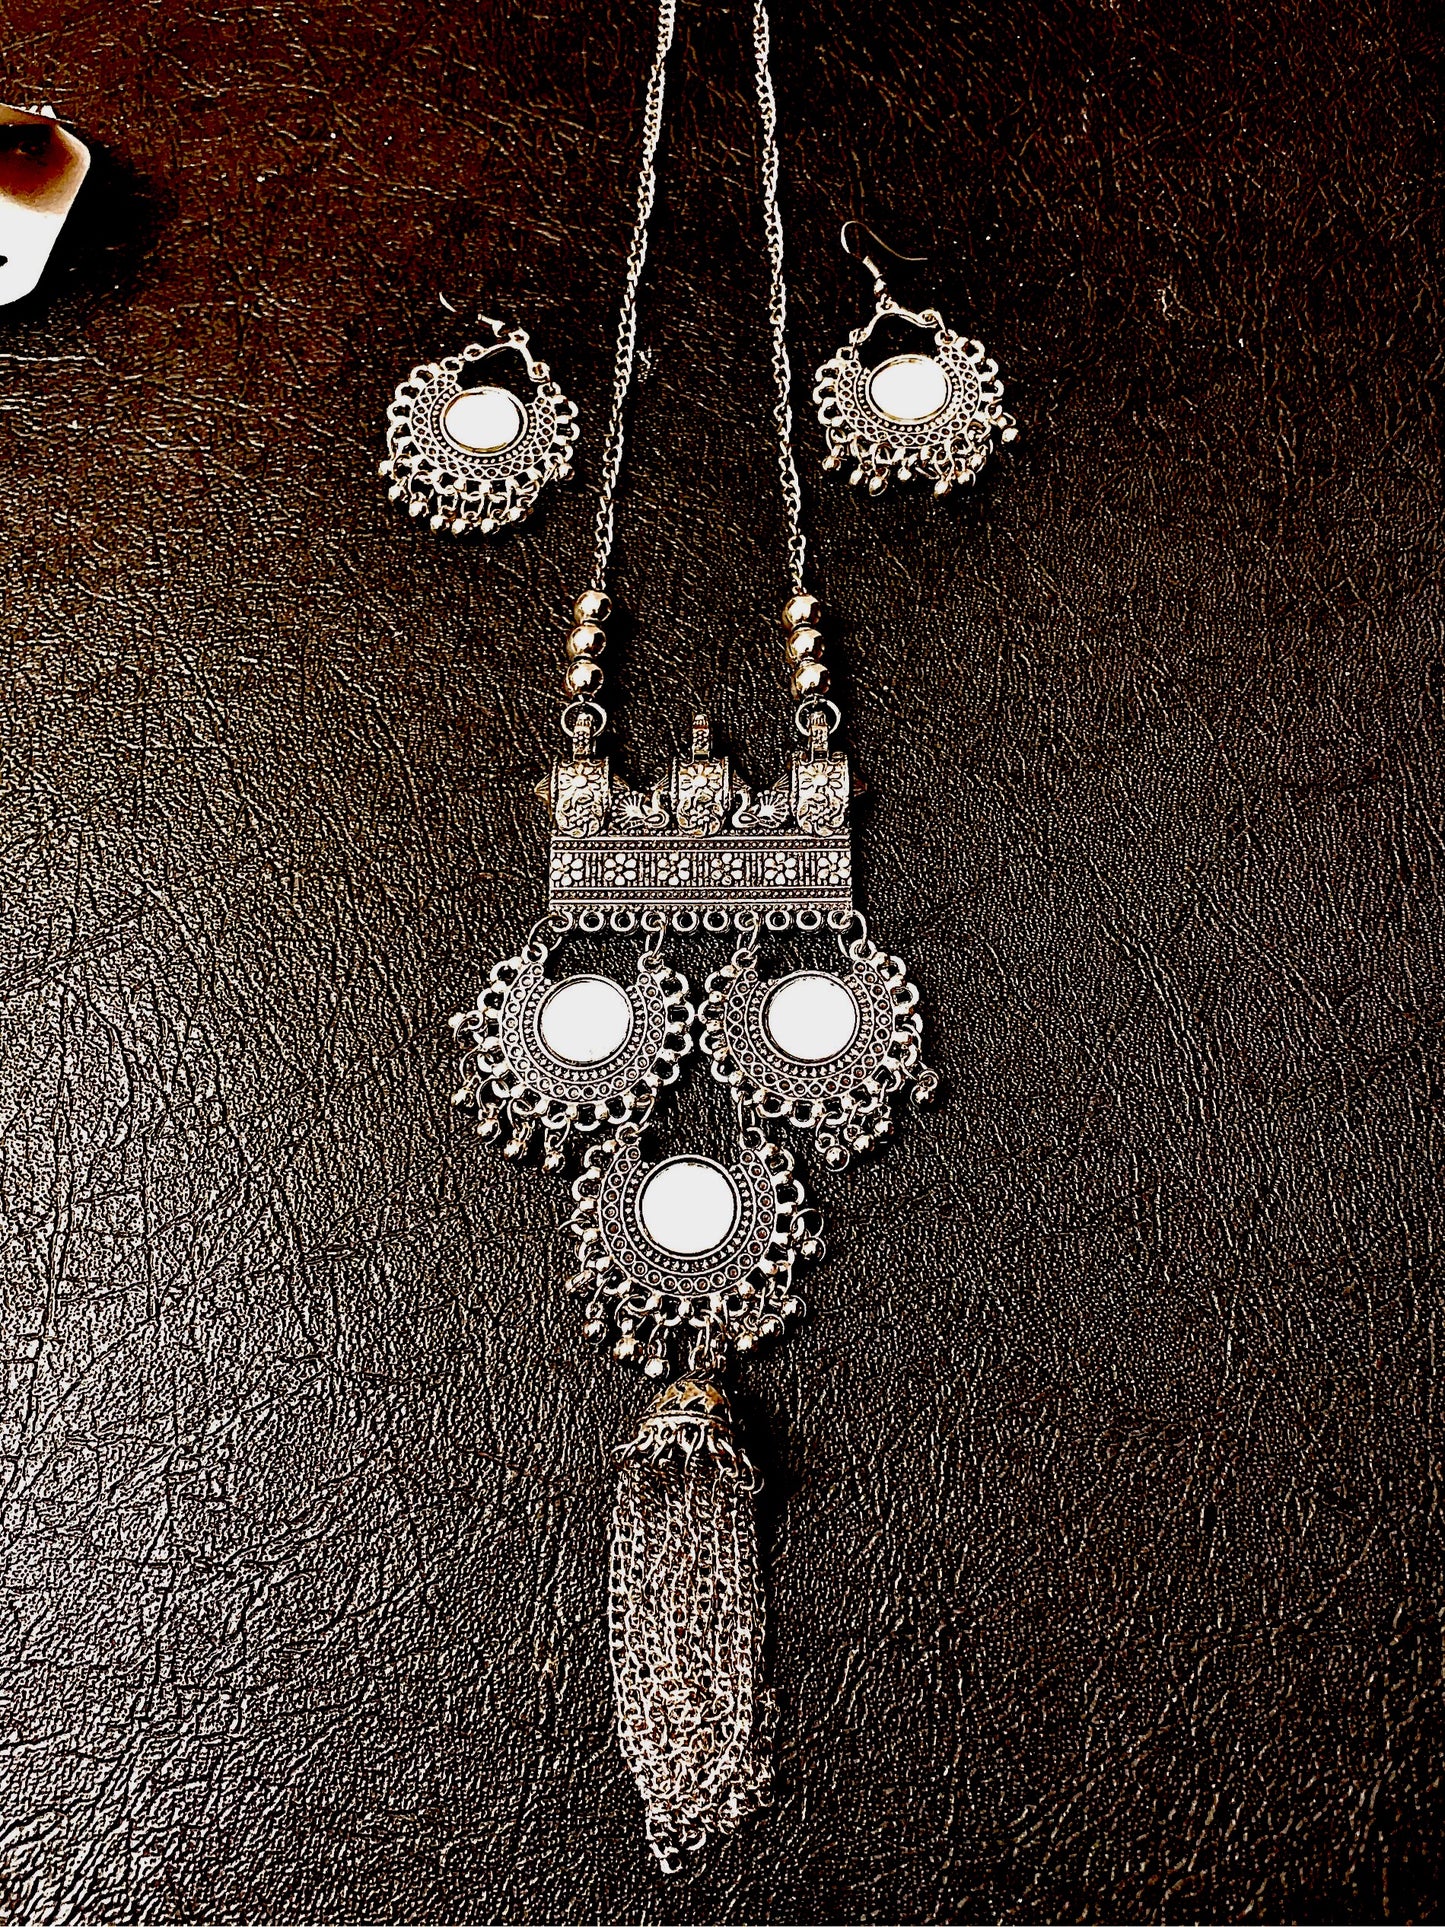 Necklace earrings Afgani mirror work oxidized jewelry women